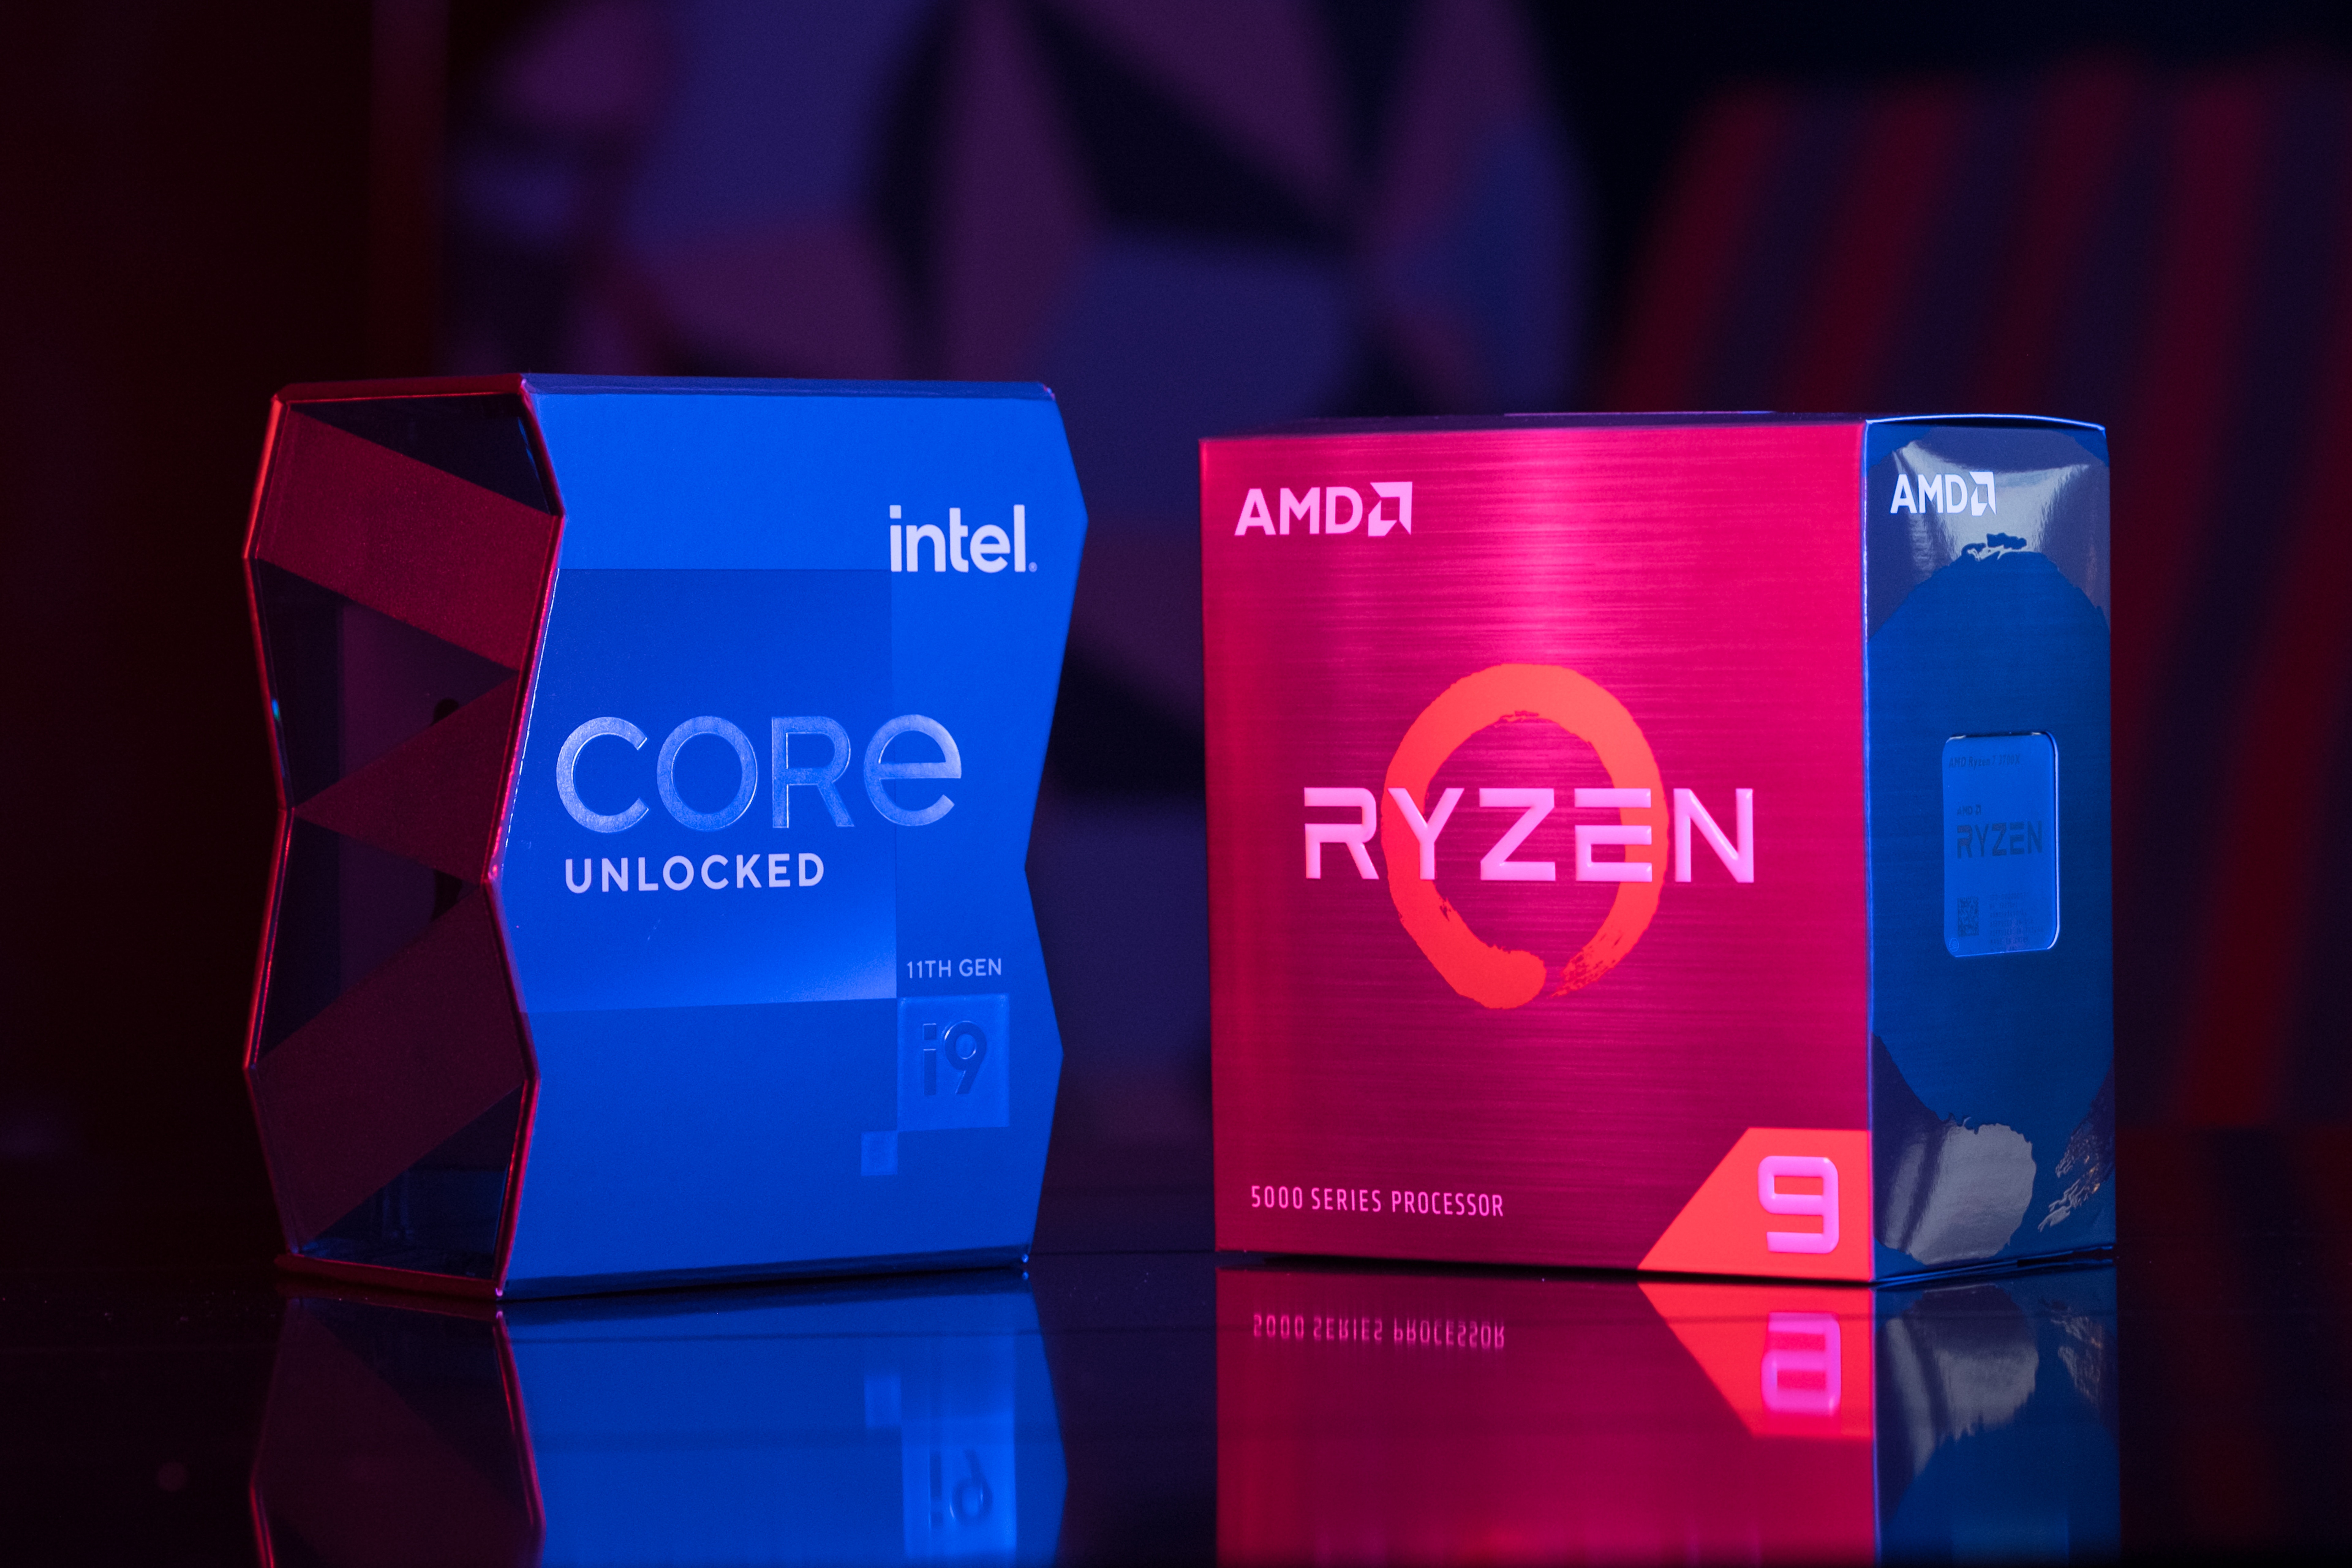 Advantage AMD: Analyst Flags Delay In Intel Server Chip Shipment